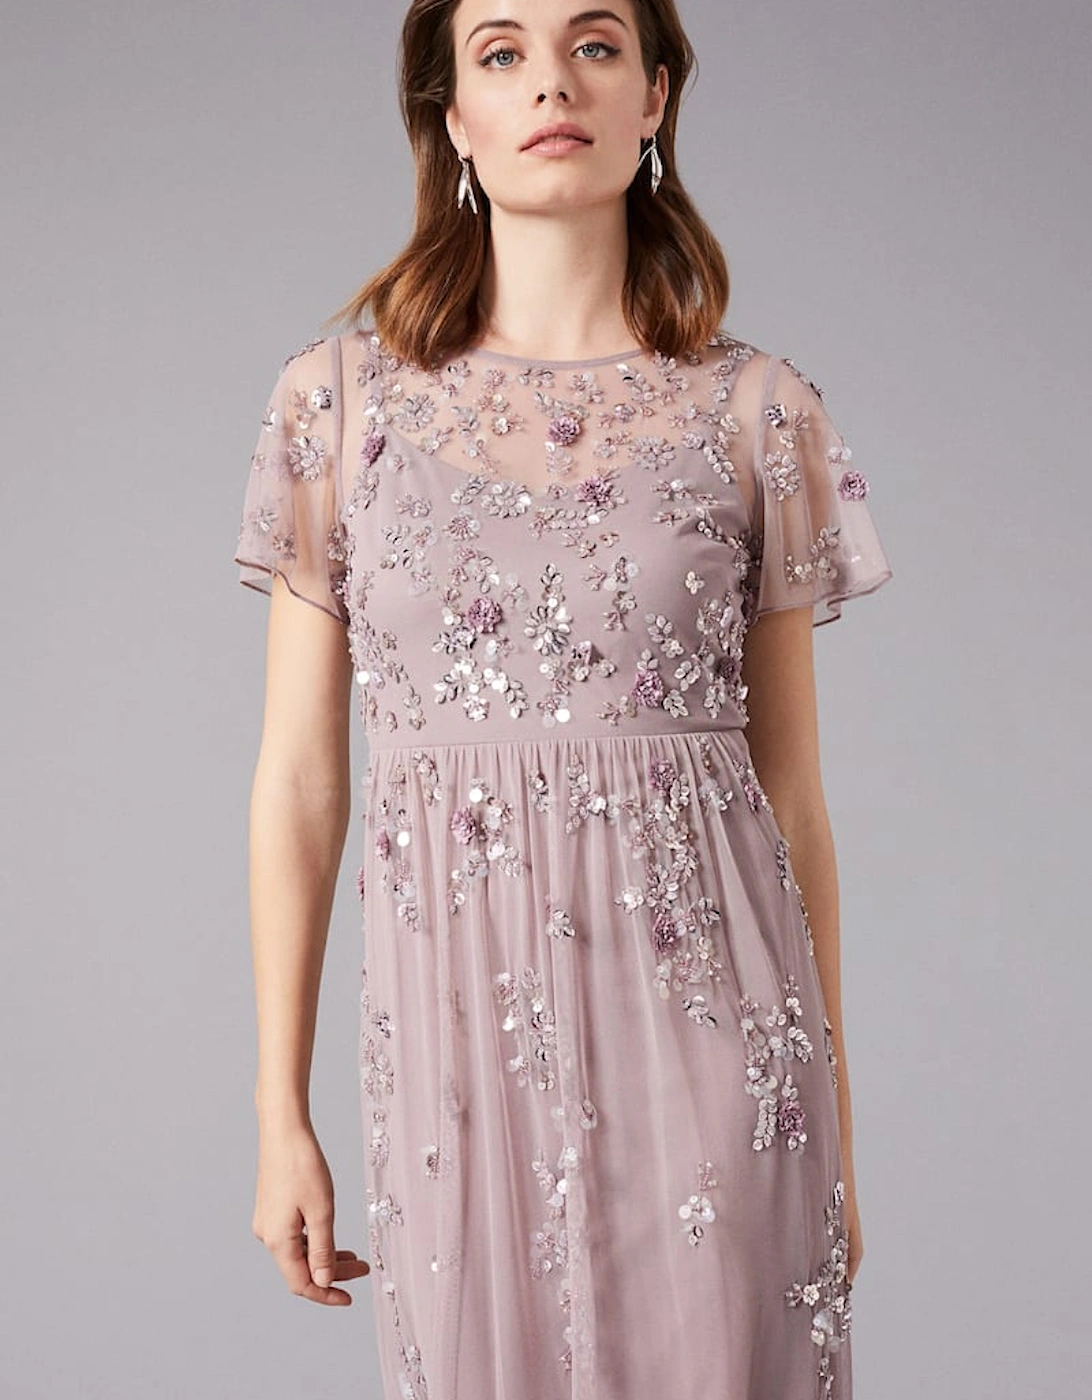 Shirin Embellished Maxi Dress